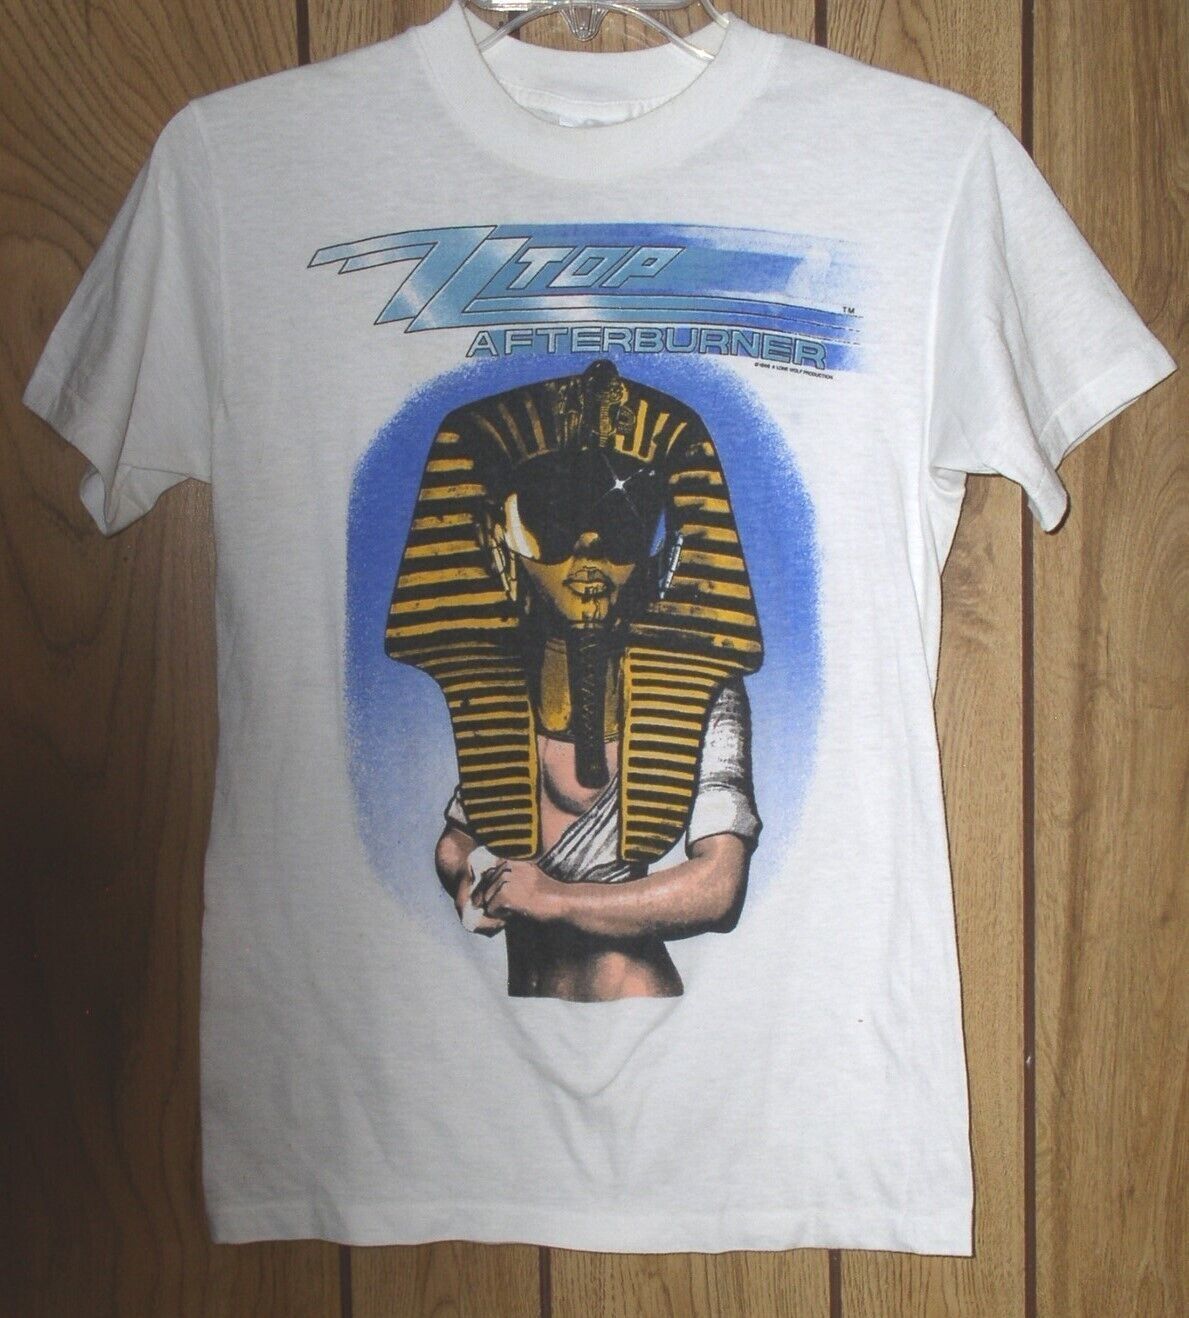 Primary image for ZZ Top Concert Tour T Shirt Vintage 1986 Afterburner Single Stitched Size Medium